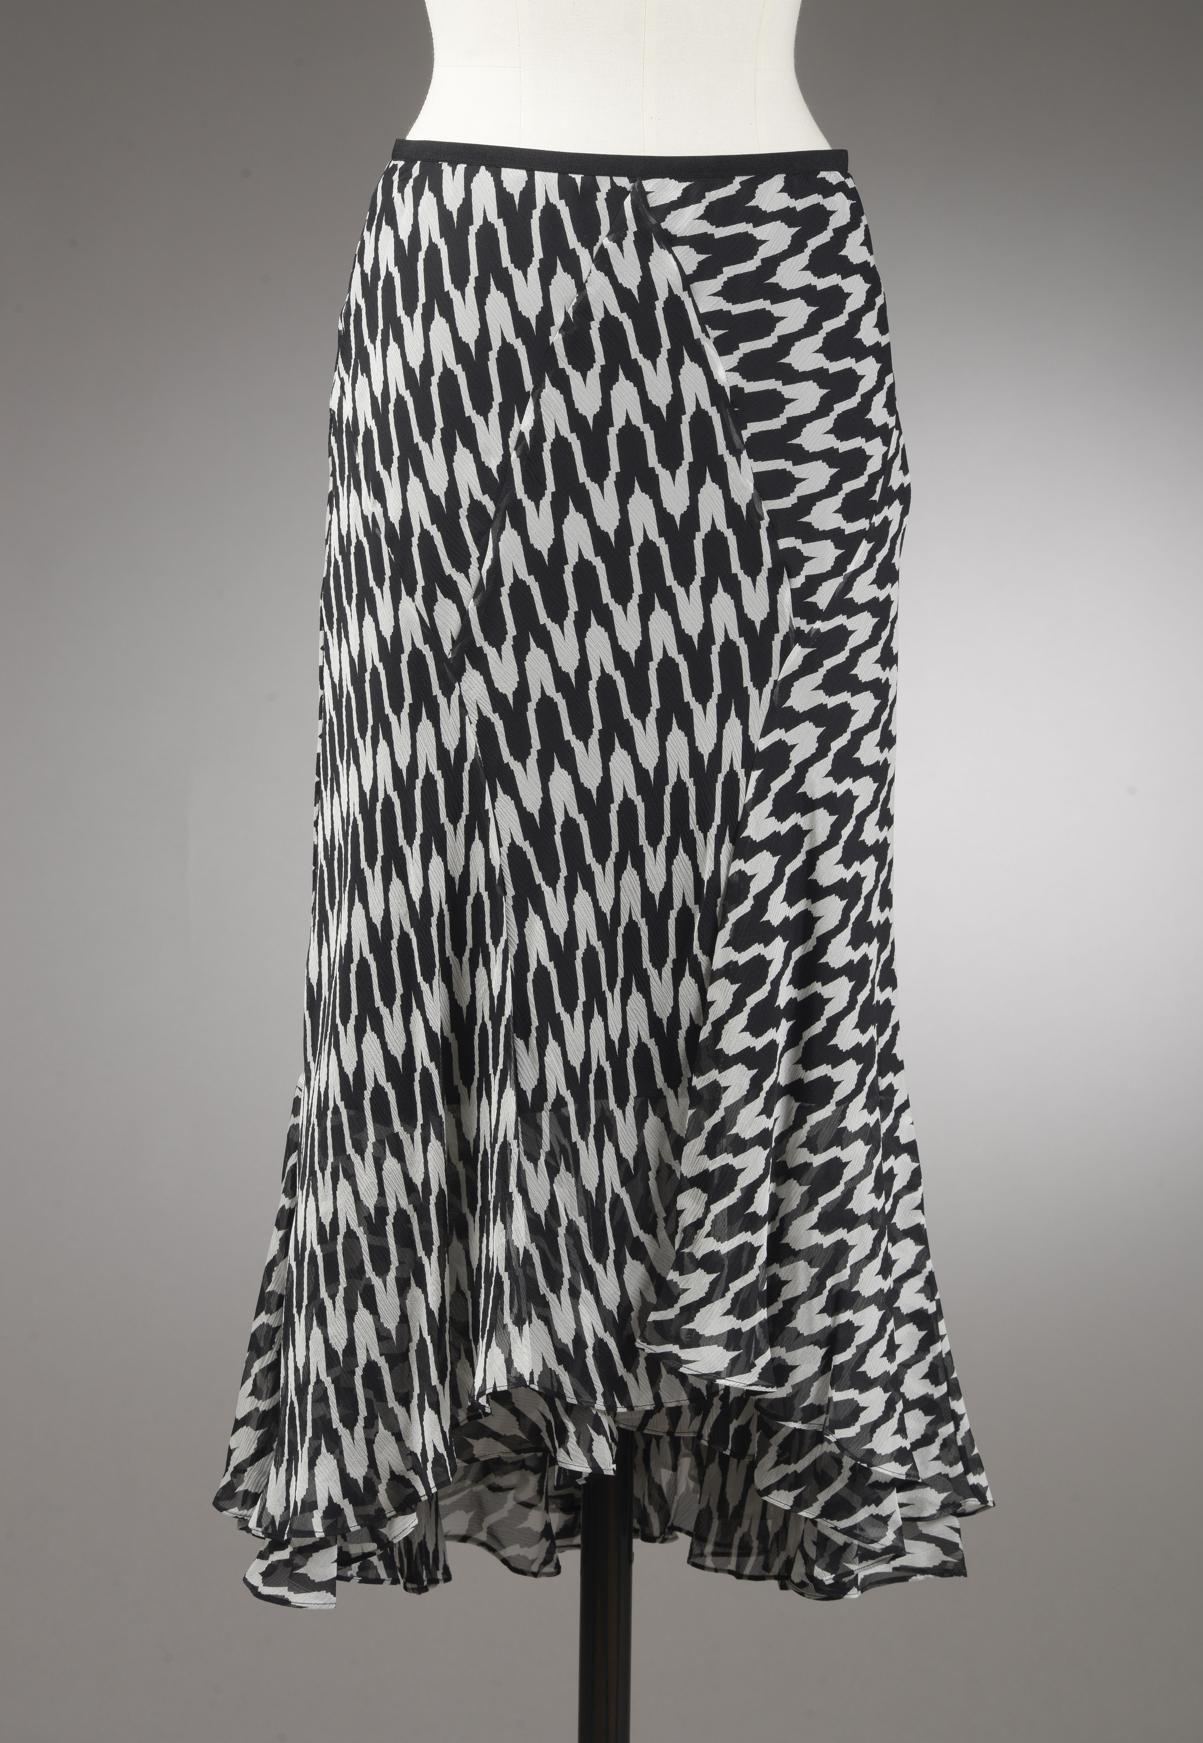 Null *尺寸L DVF - Diane Von Fürstenberg

套装包括。

-丝质雪纺喇叭裙，型号为 "DVF Debra"，印有黑白斑马条纹的&hellip;